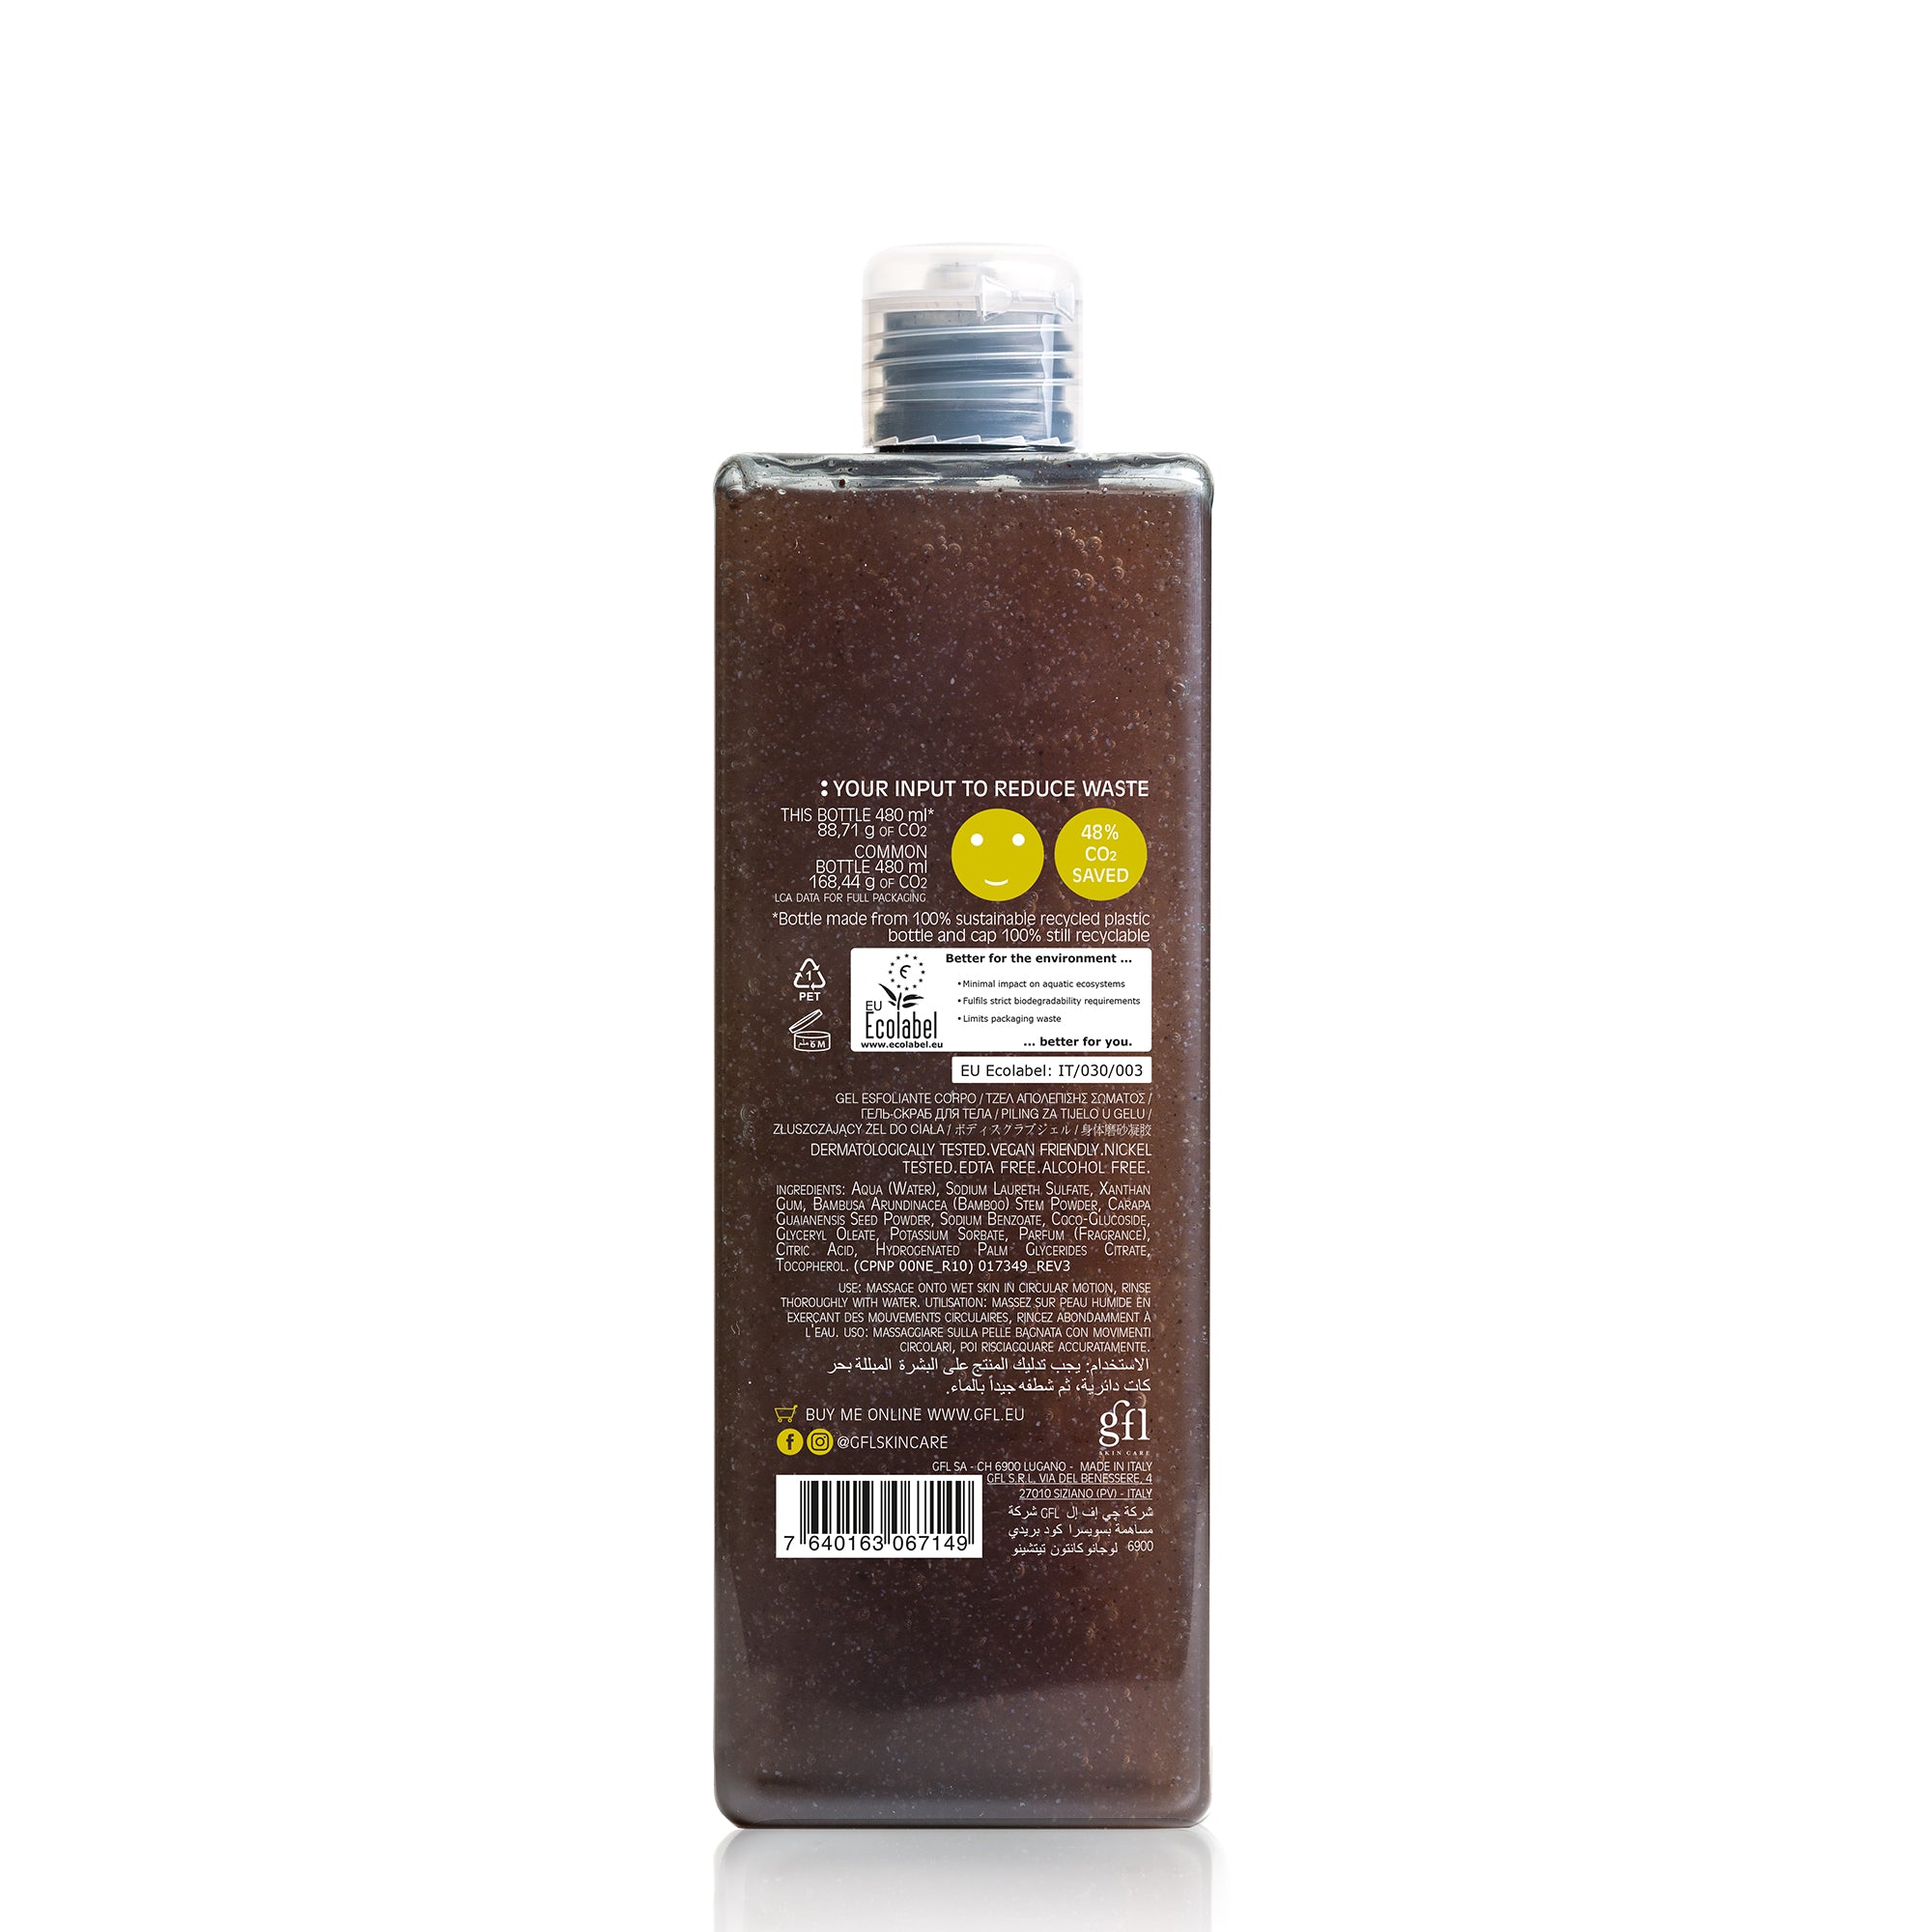 Anyah Exfoliating Scrub Body Gel Ecolabel Certified info on the back(